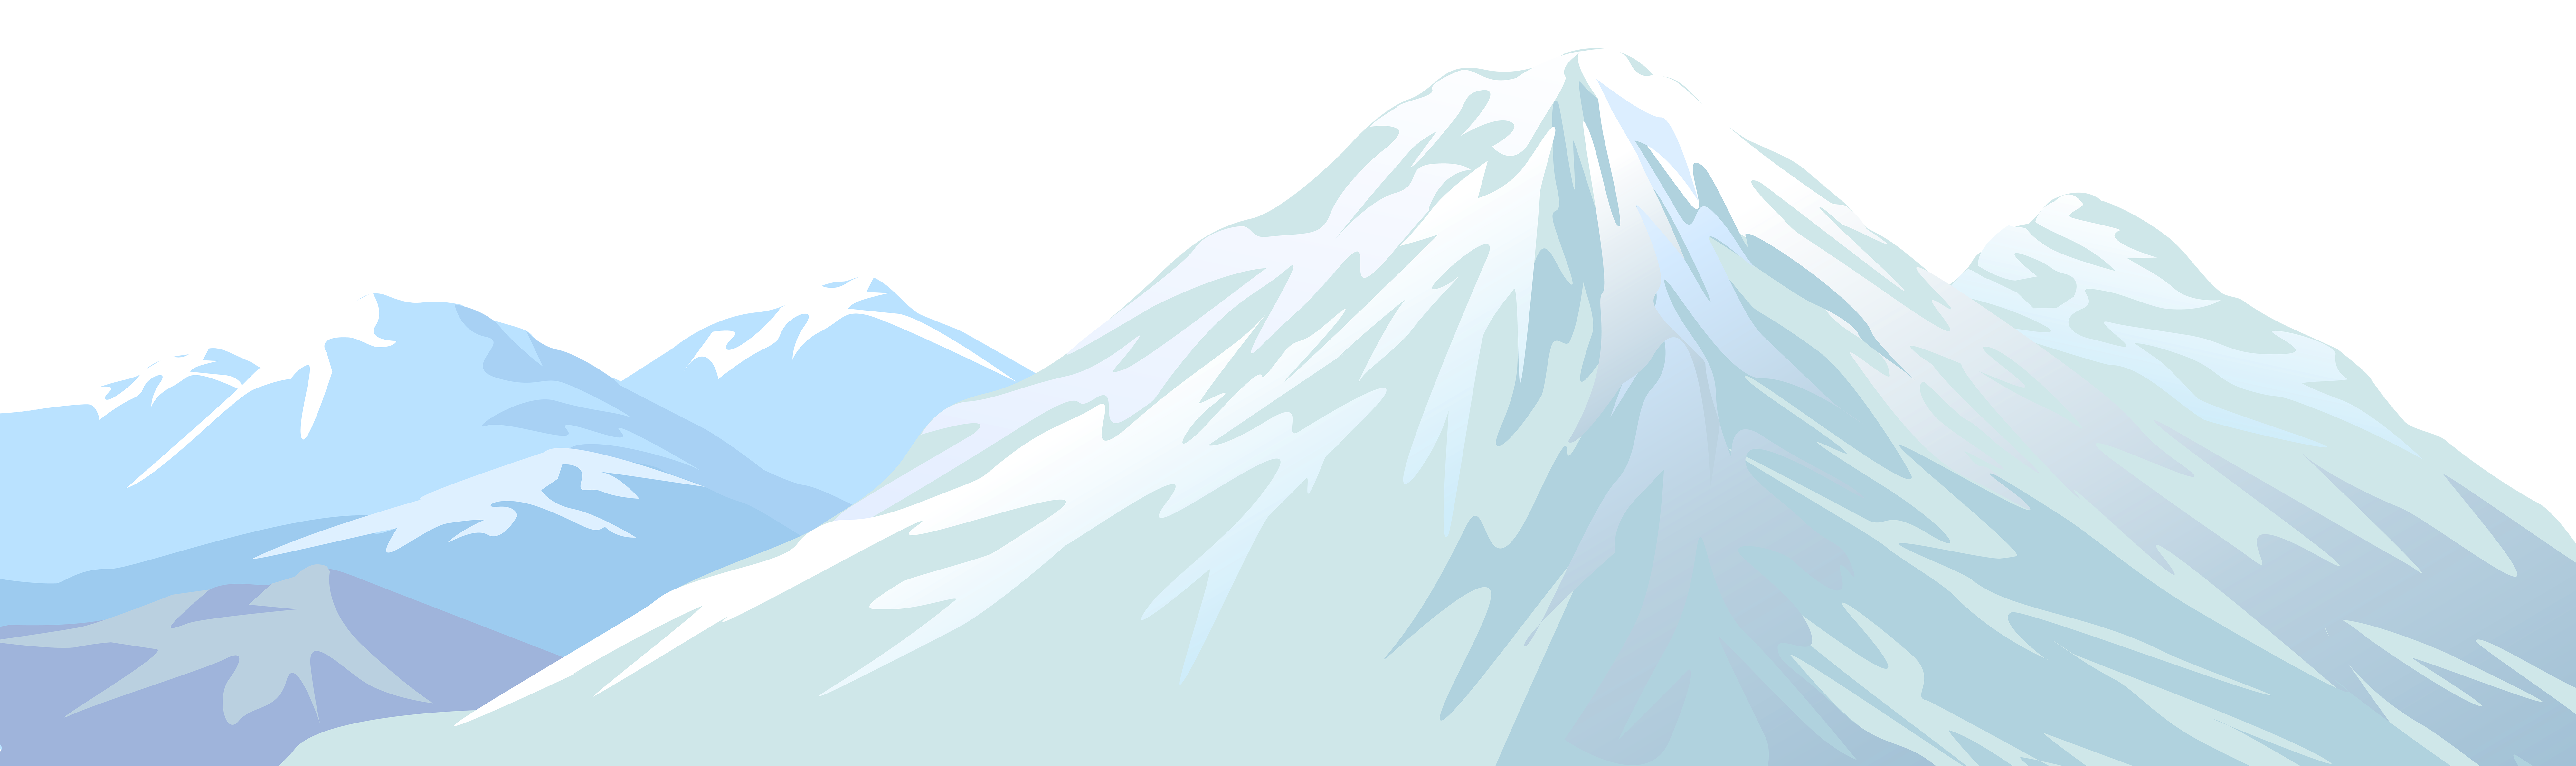 mountains clipart snowy mountain